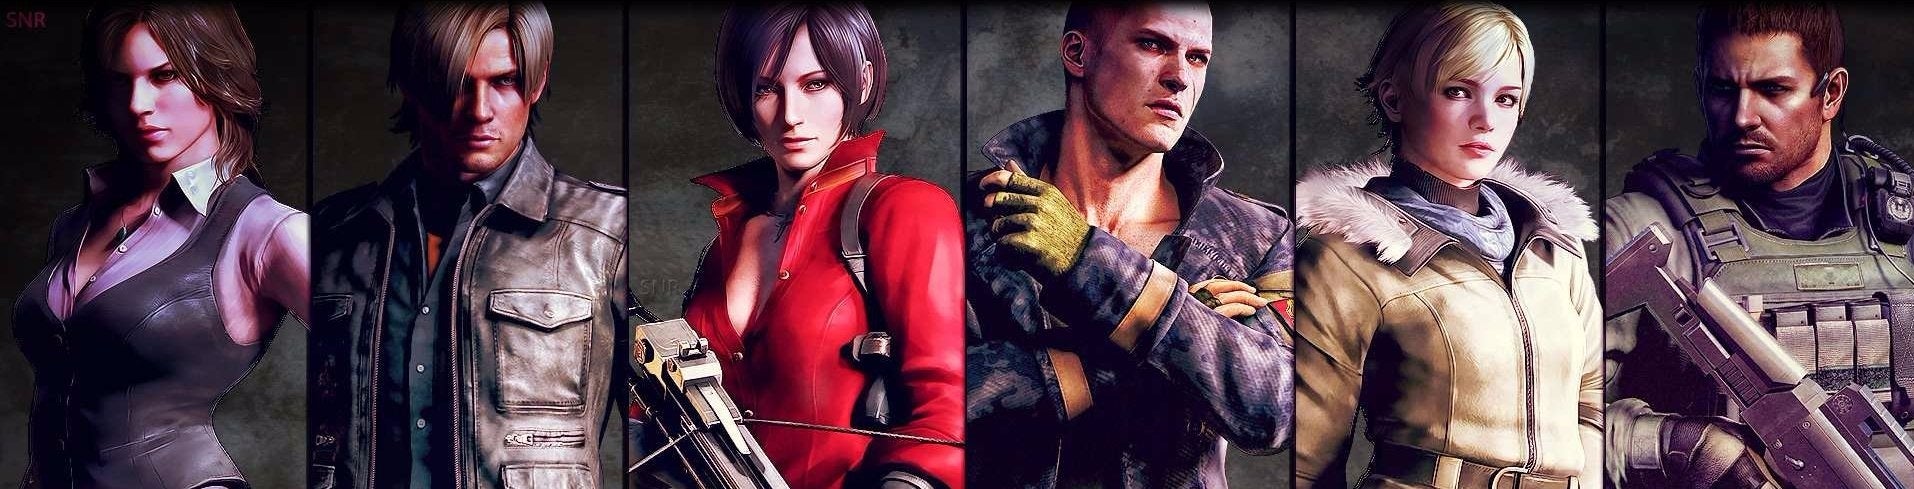 Imagem para Confronto: Resident Evil 6 Remastered